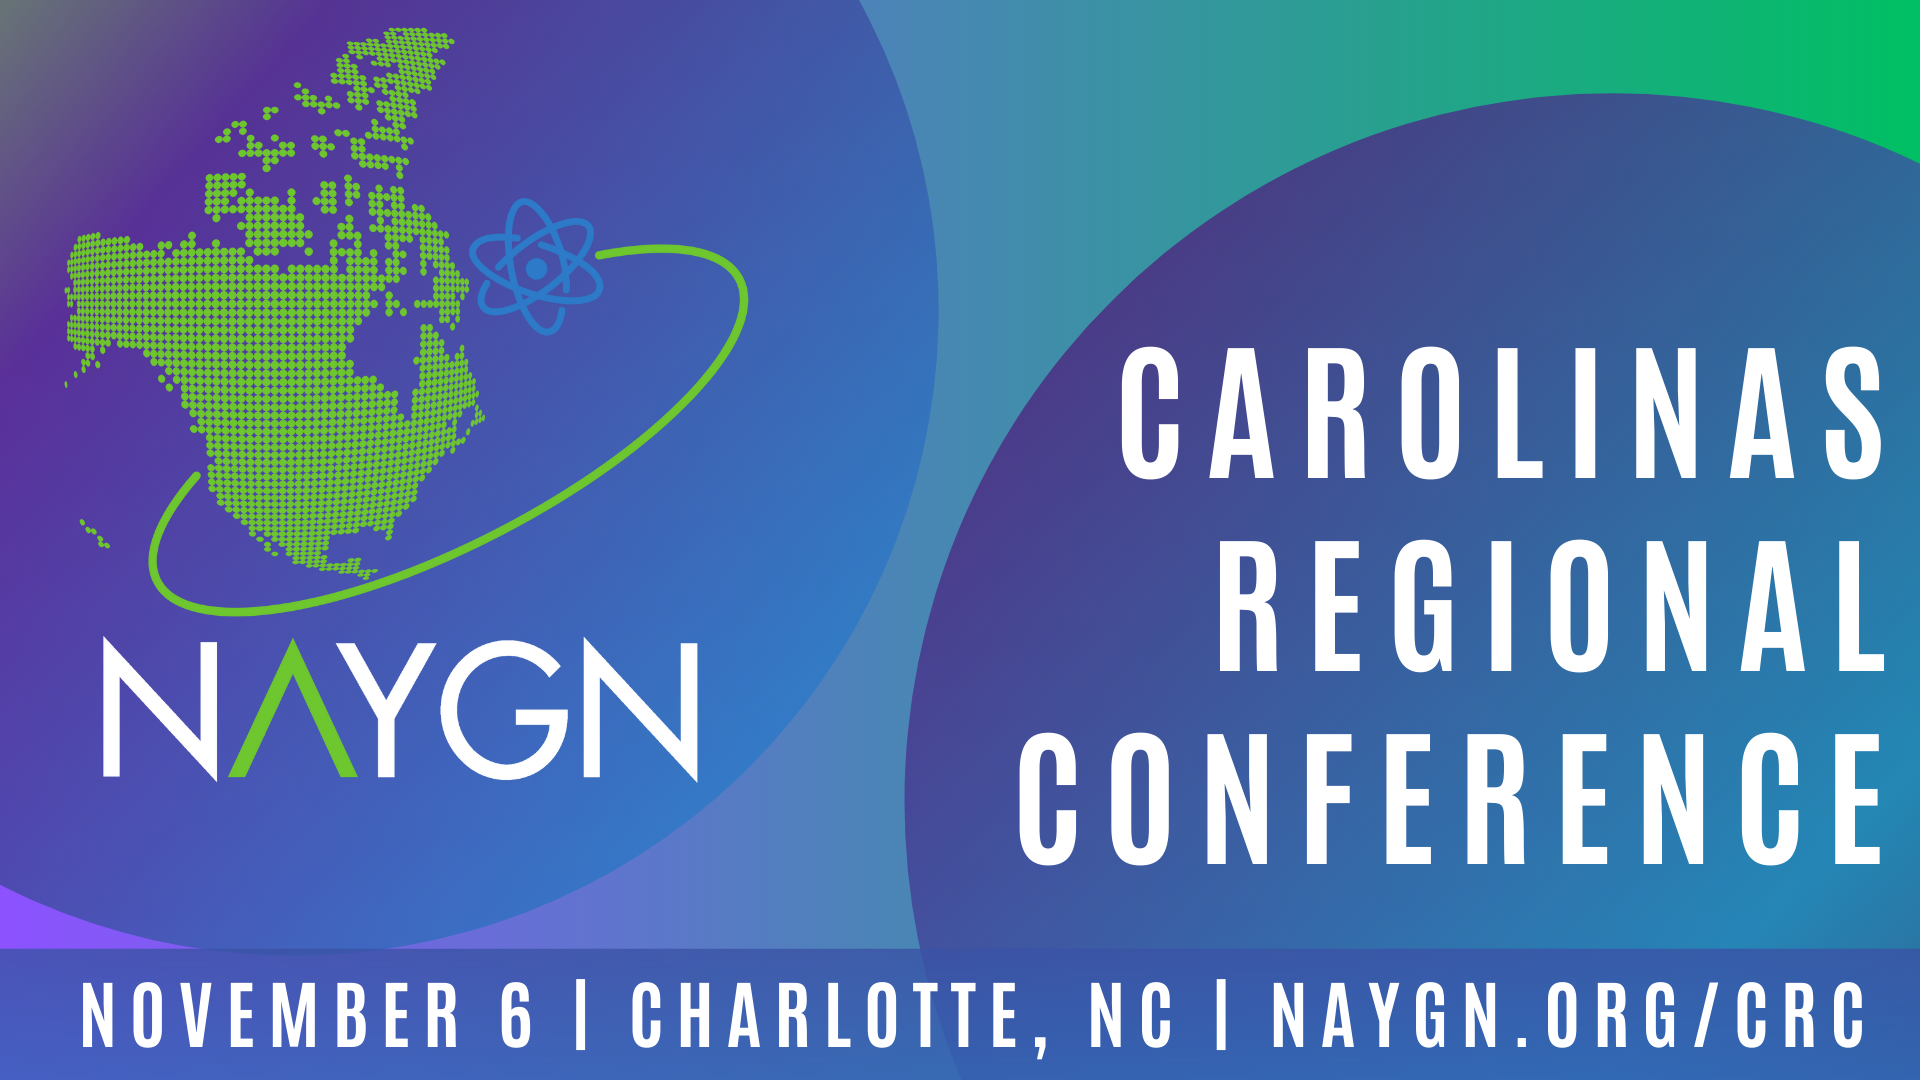 NAYGN Carolinas Regional Conference Flyer | October 26th | Charlotte, NC